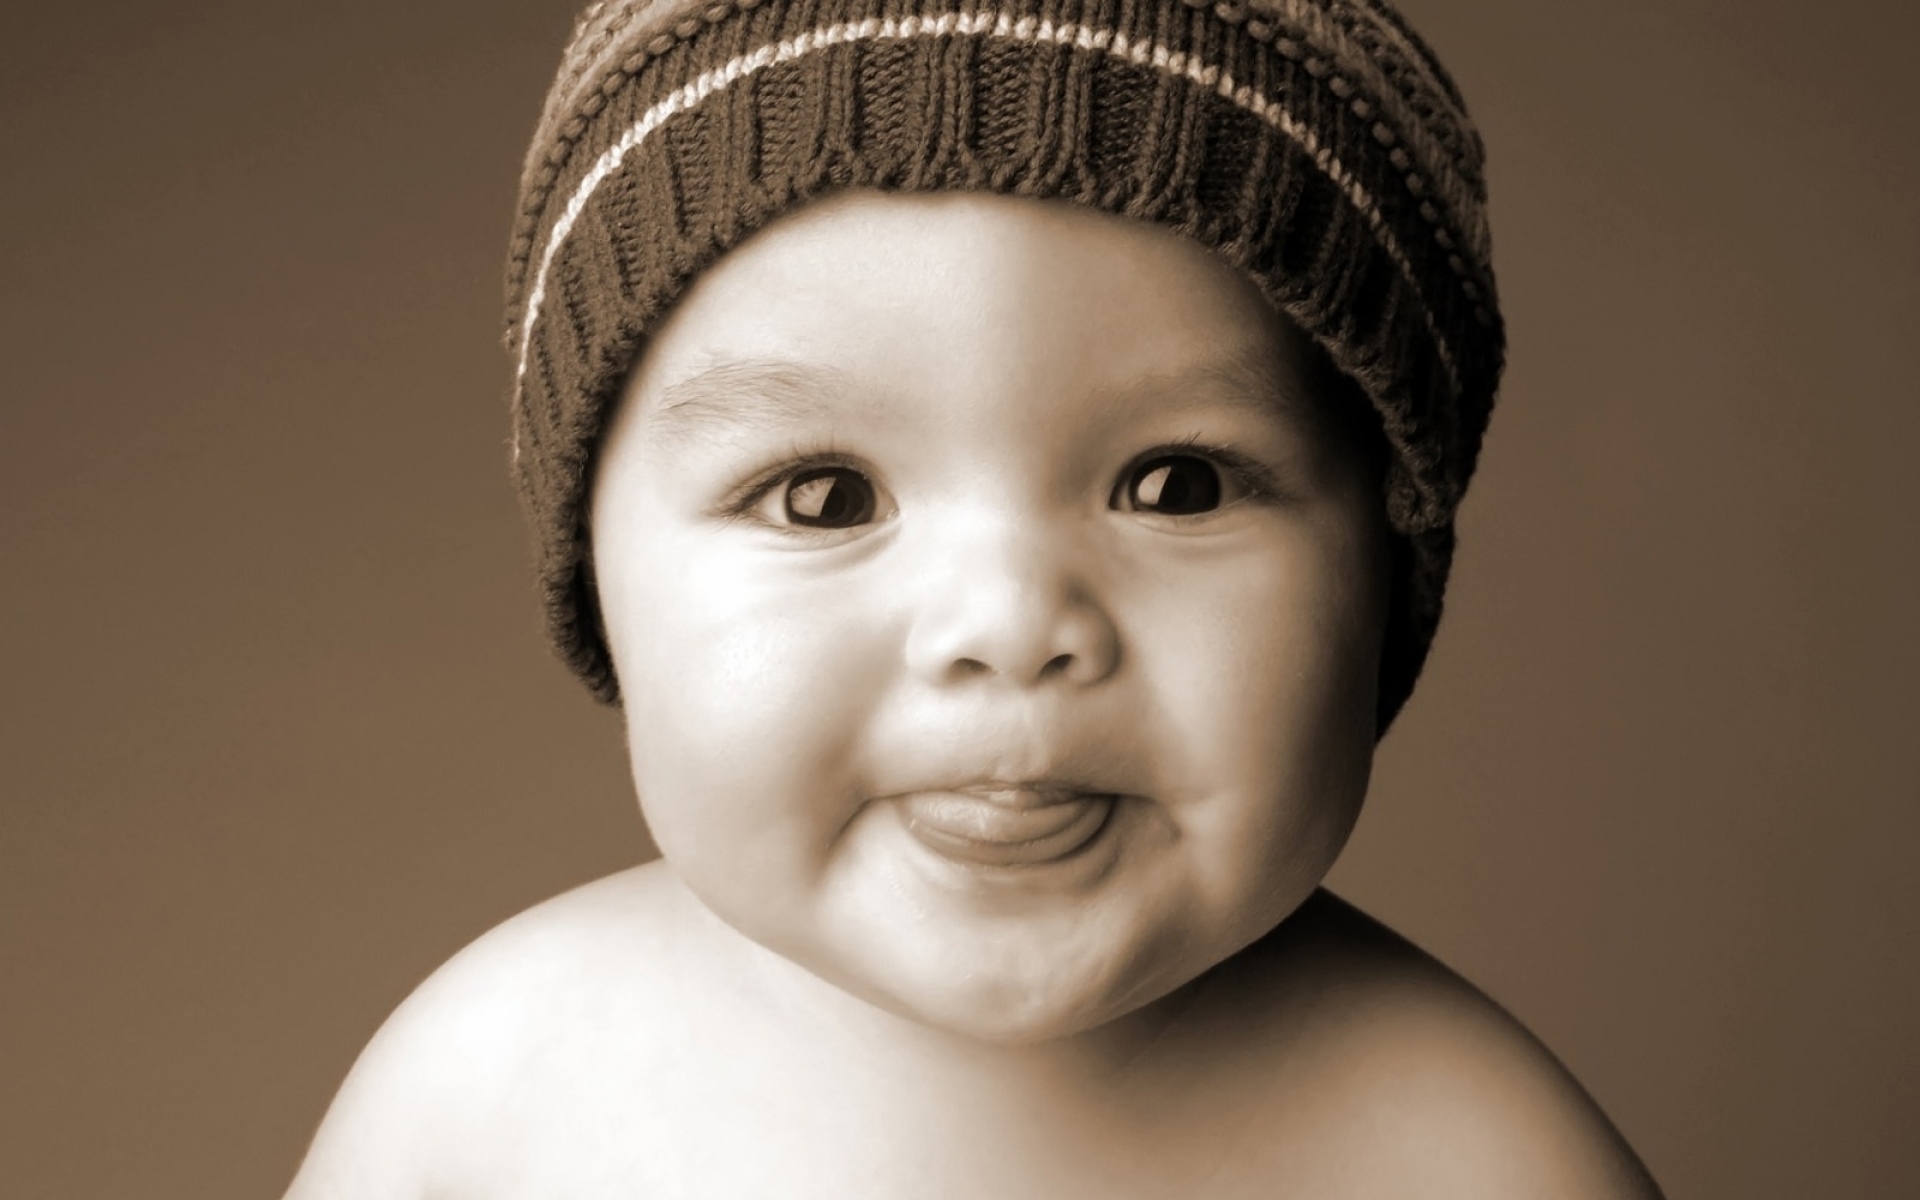 Картинки Ребенок, лицо, улыбка, язык, шляпа фото и обои на рабочий стол